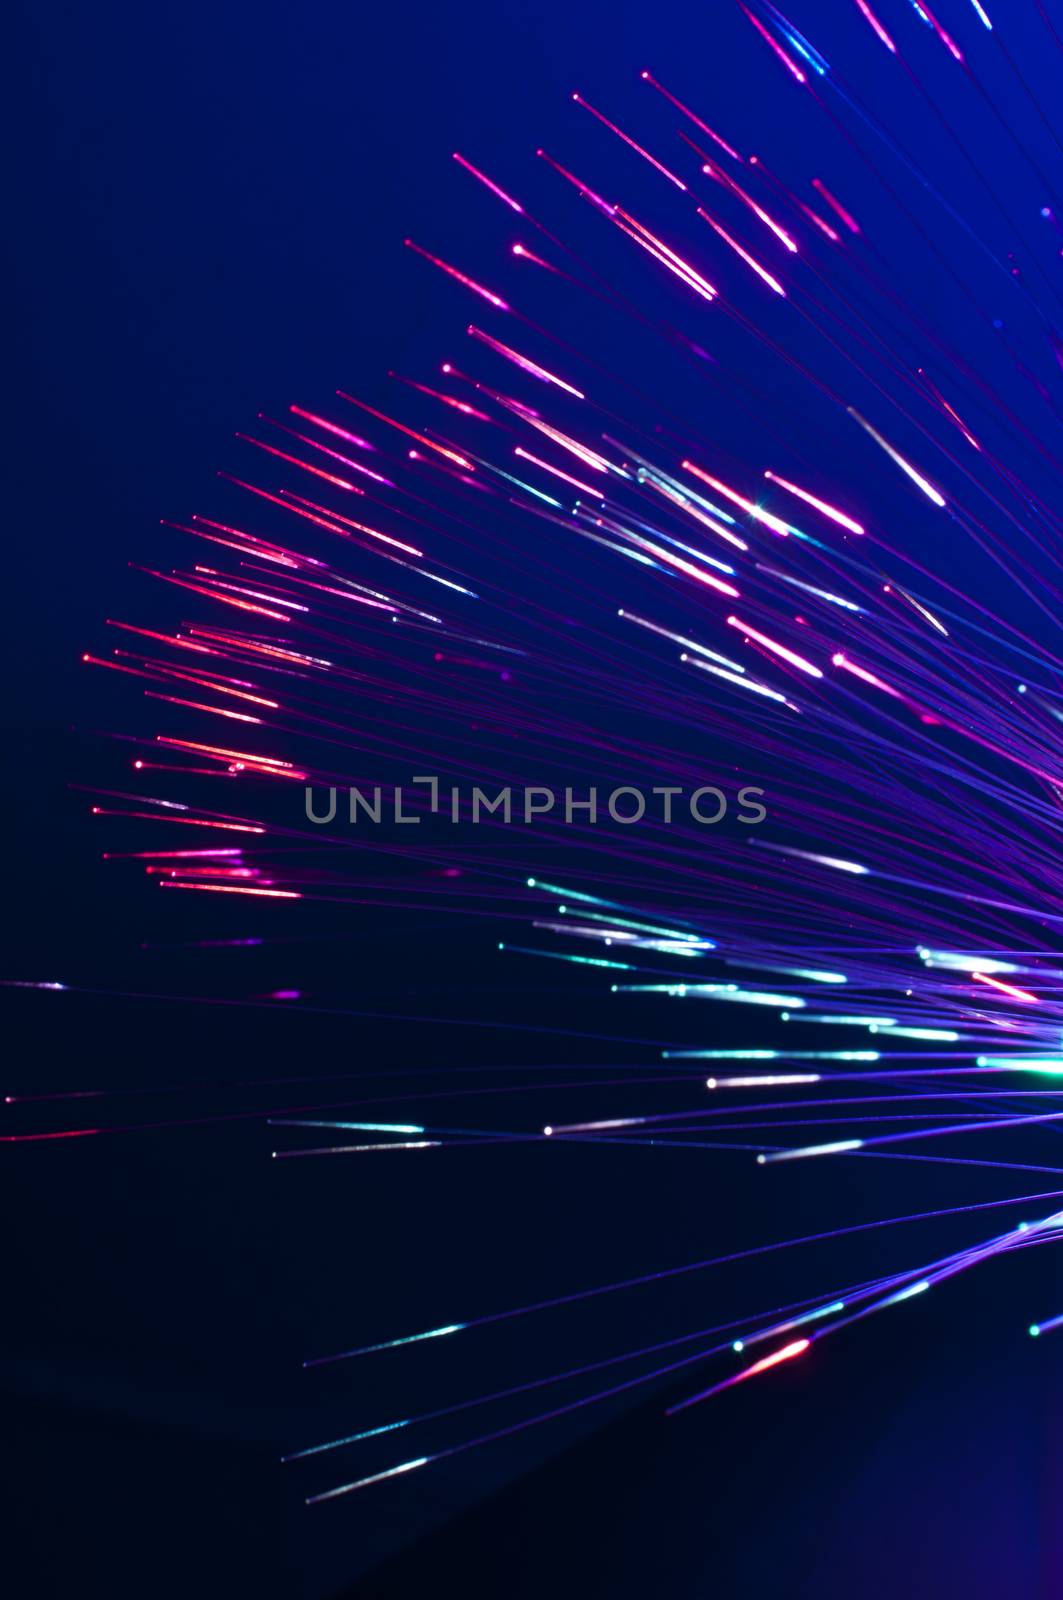 Multicolored optical fibers